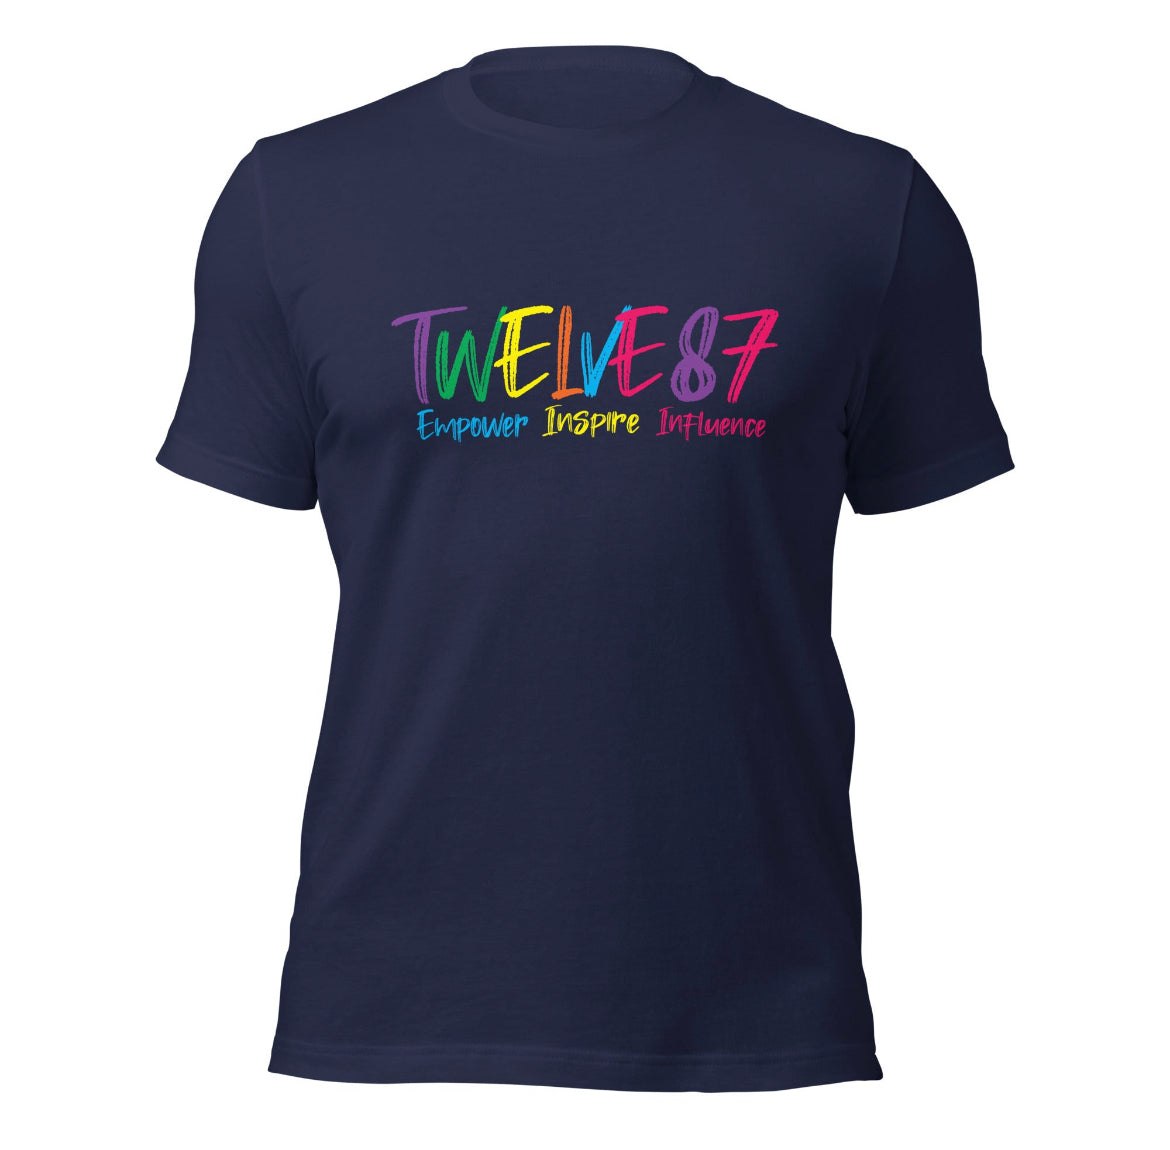 Twelve 87 Brand T-Shirt